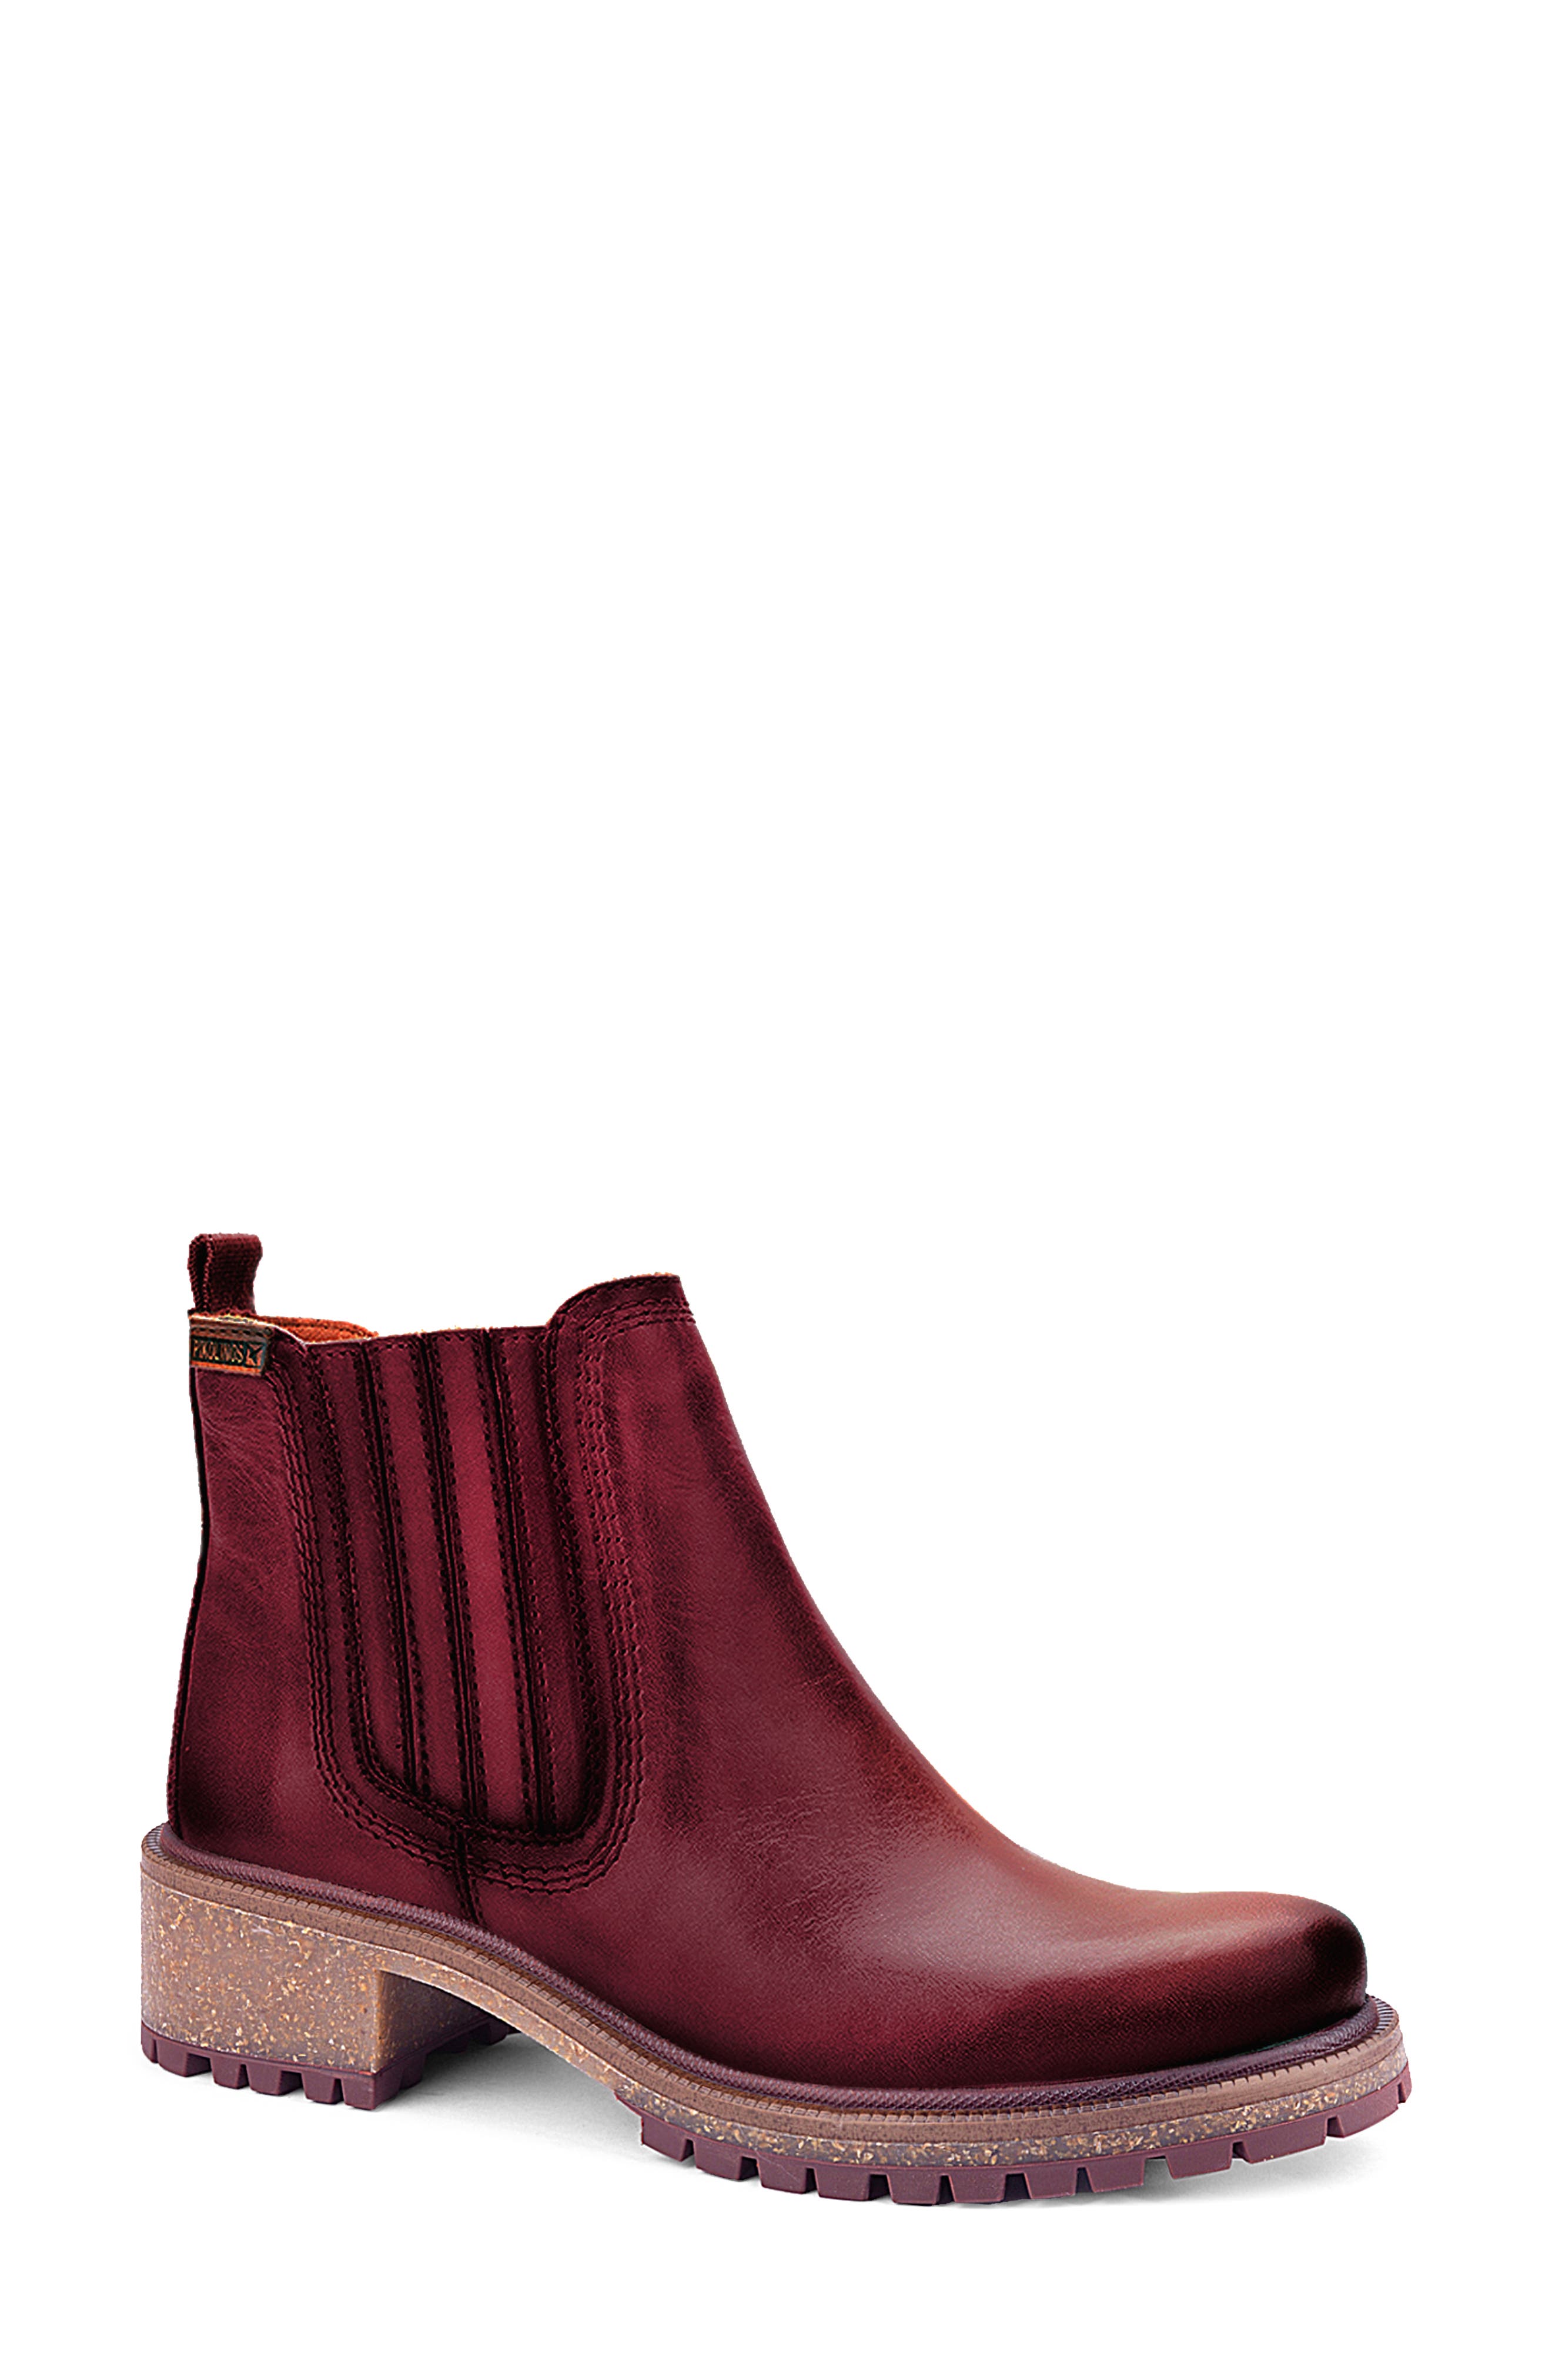 pikolinos boots on sale